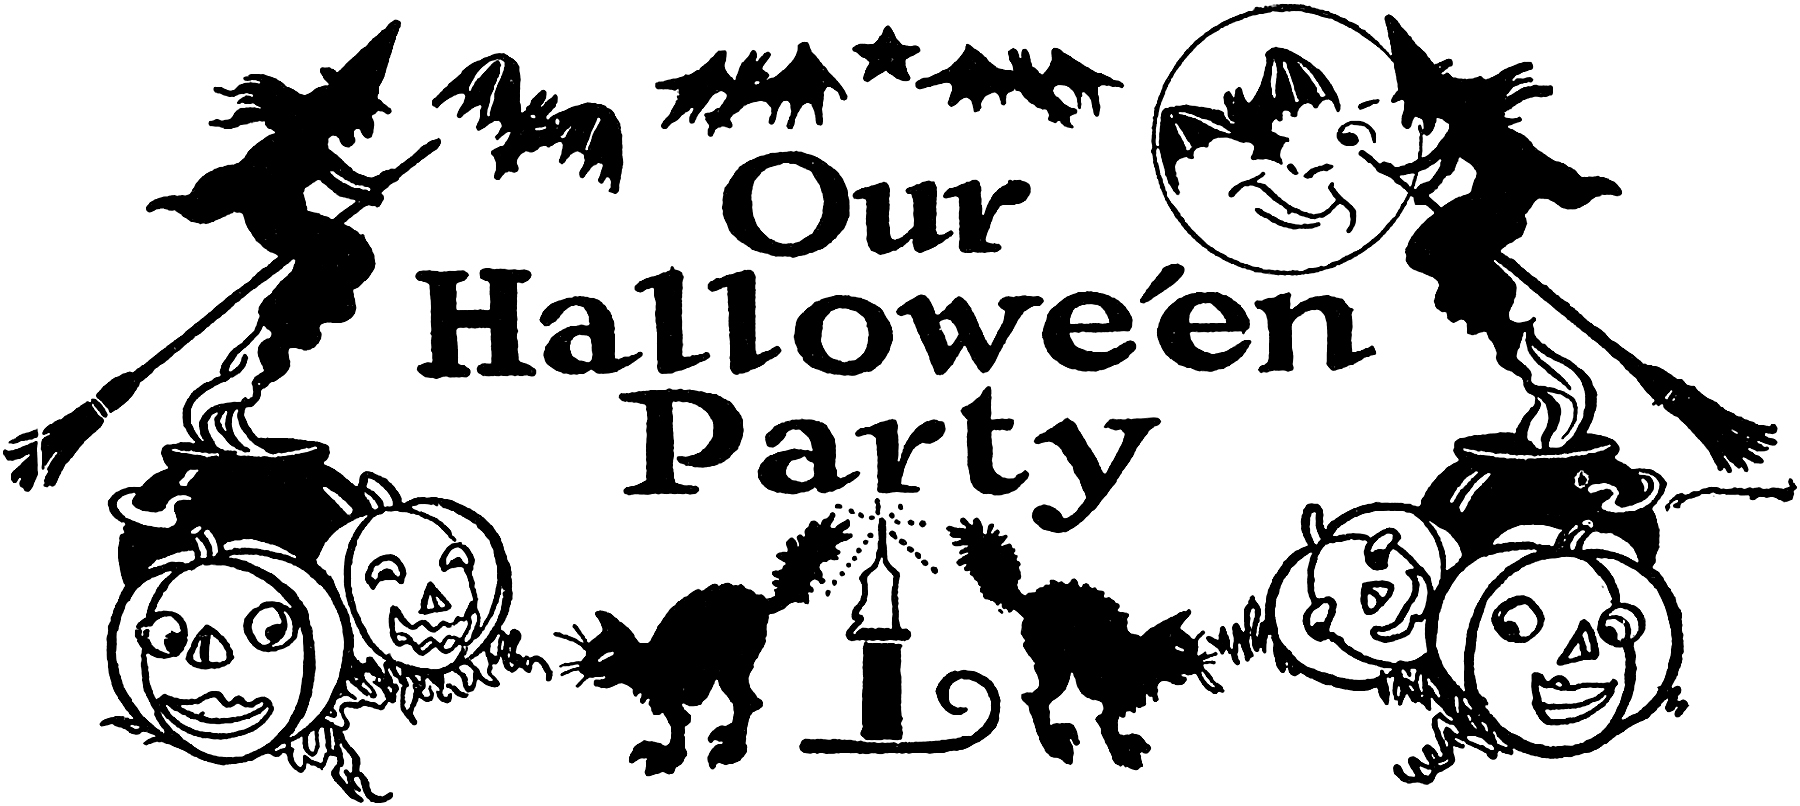 Nostalgic Black and White Halloween Party Clip Art